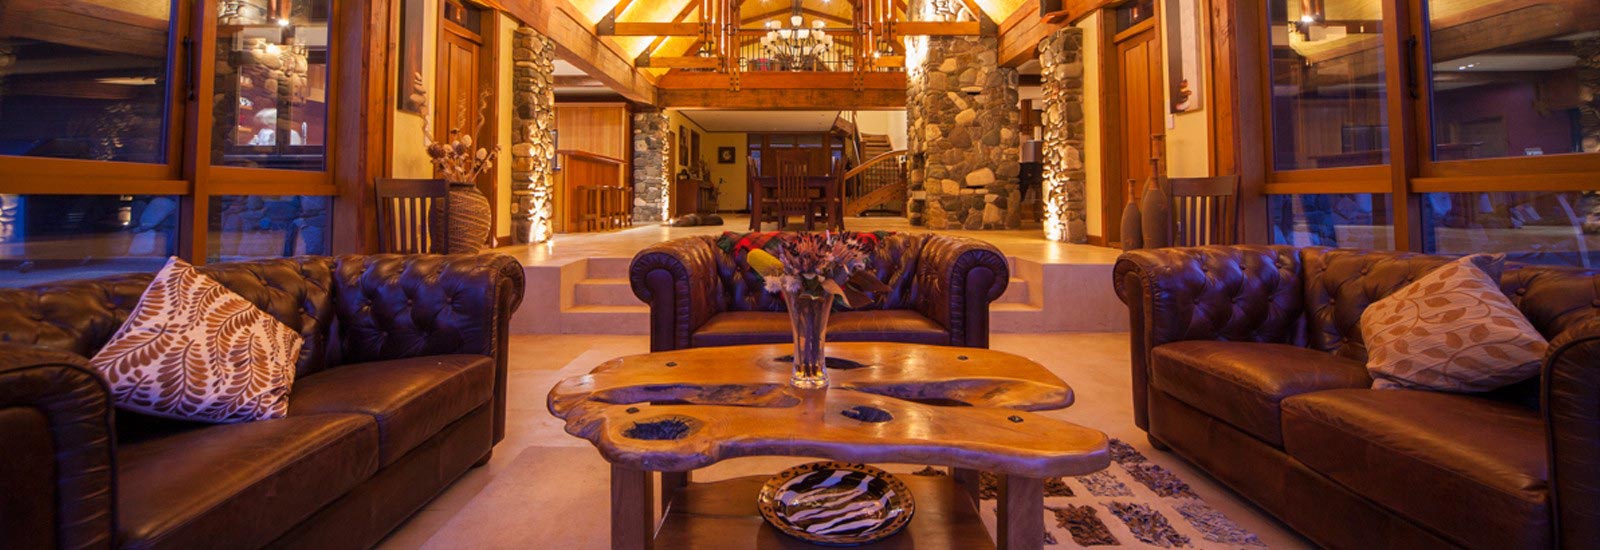 Luxury Lodge Interior